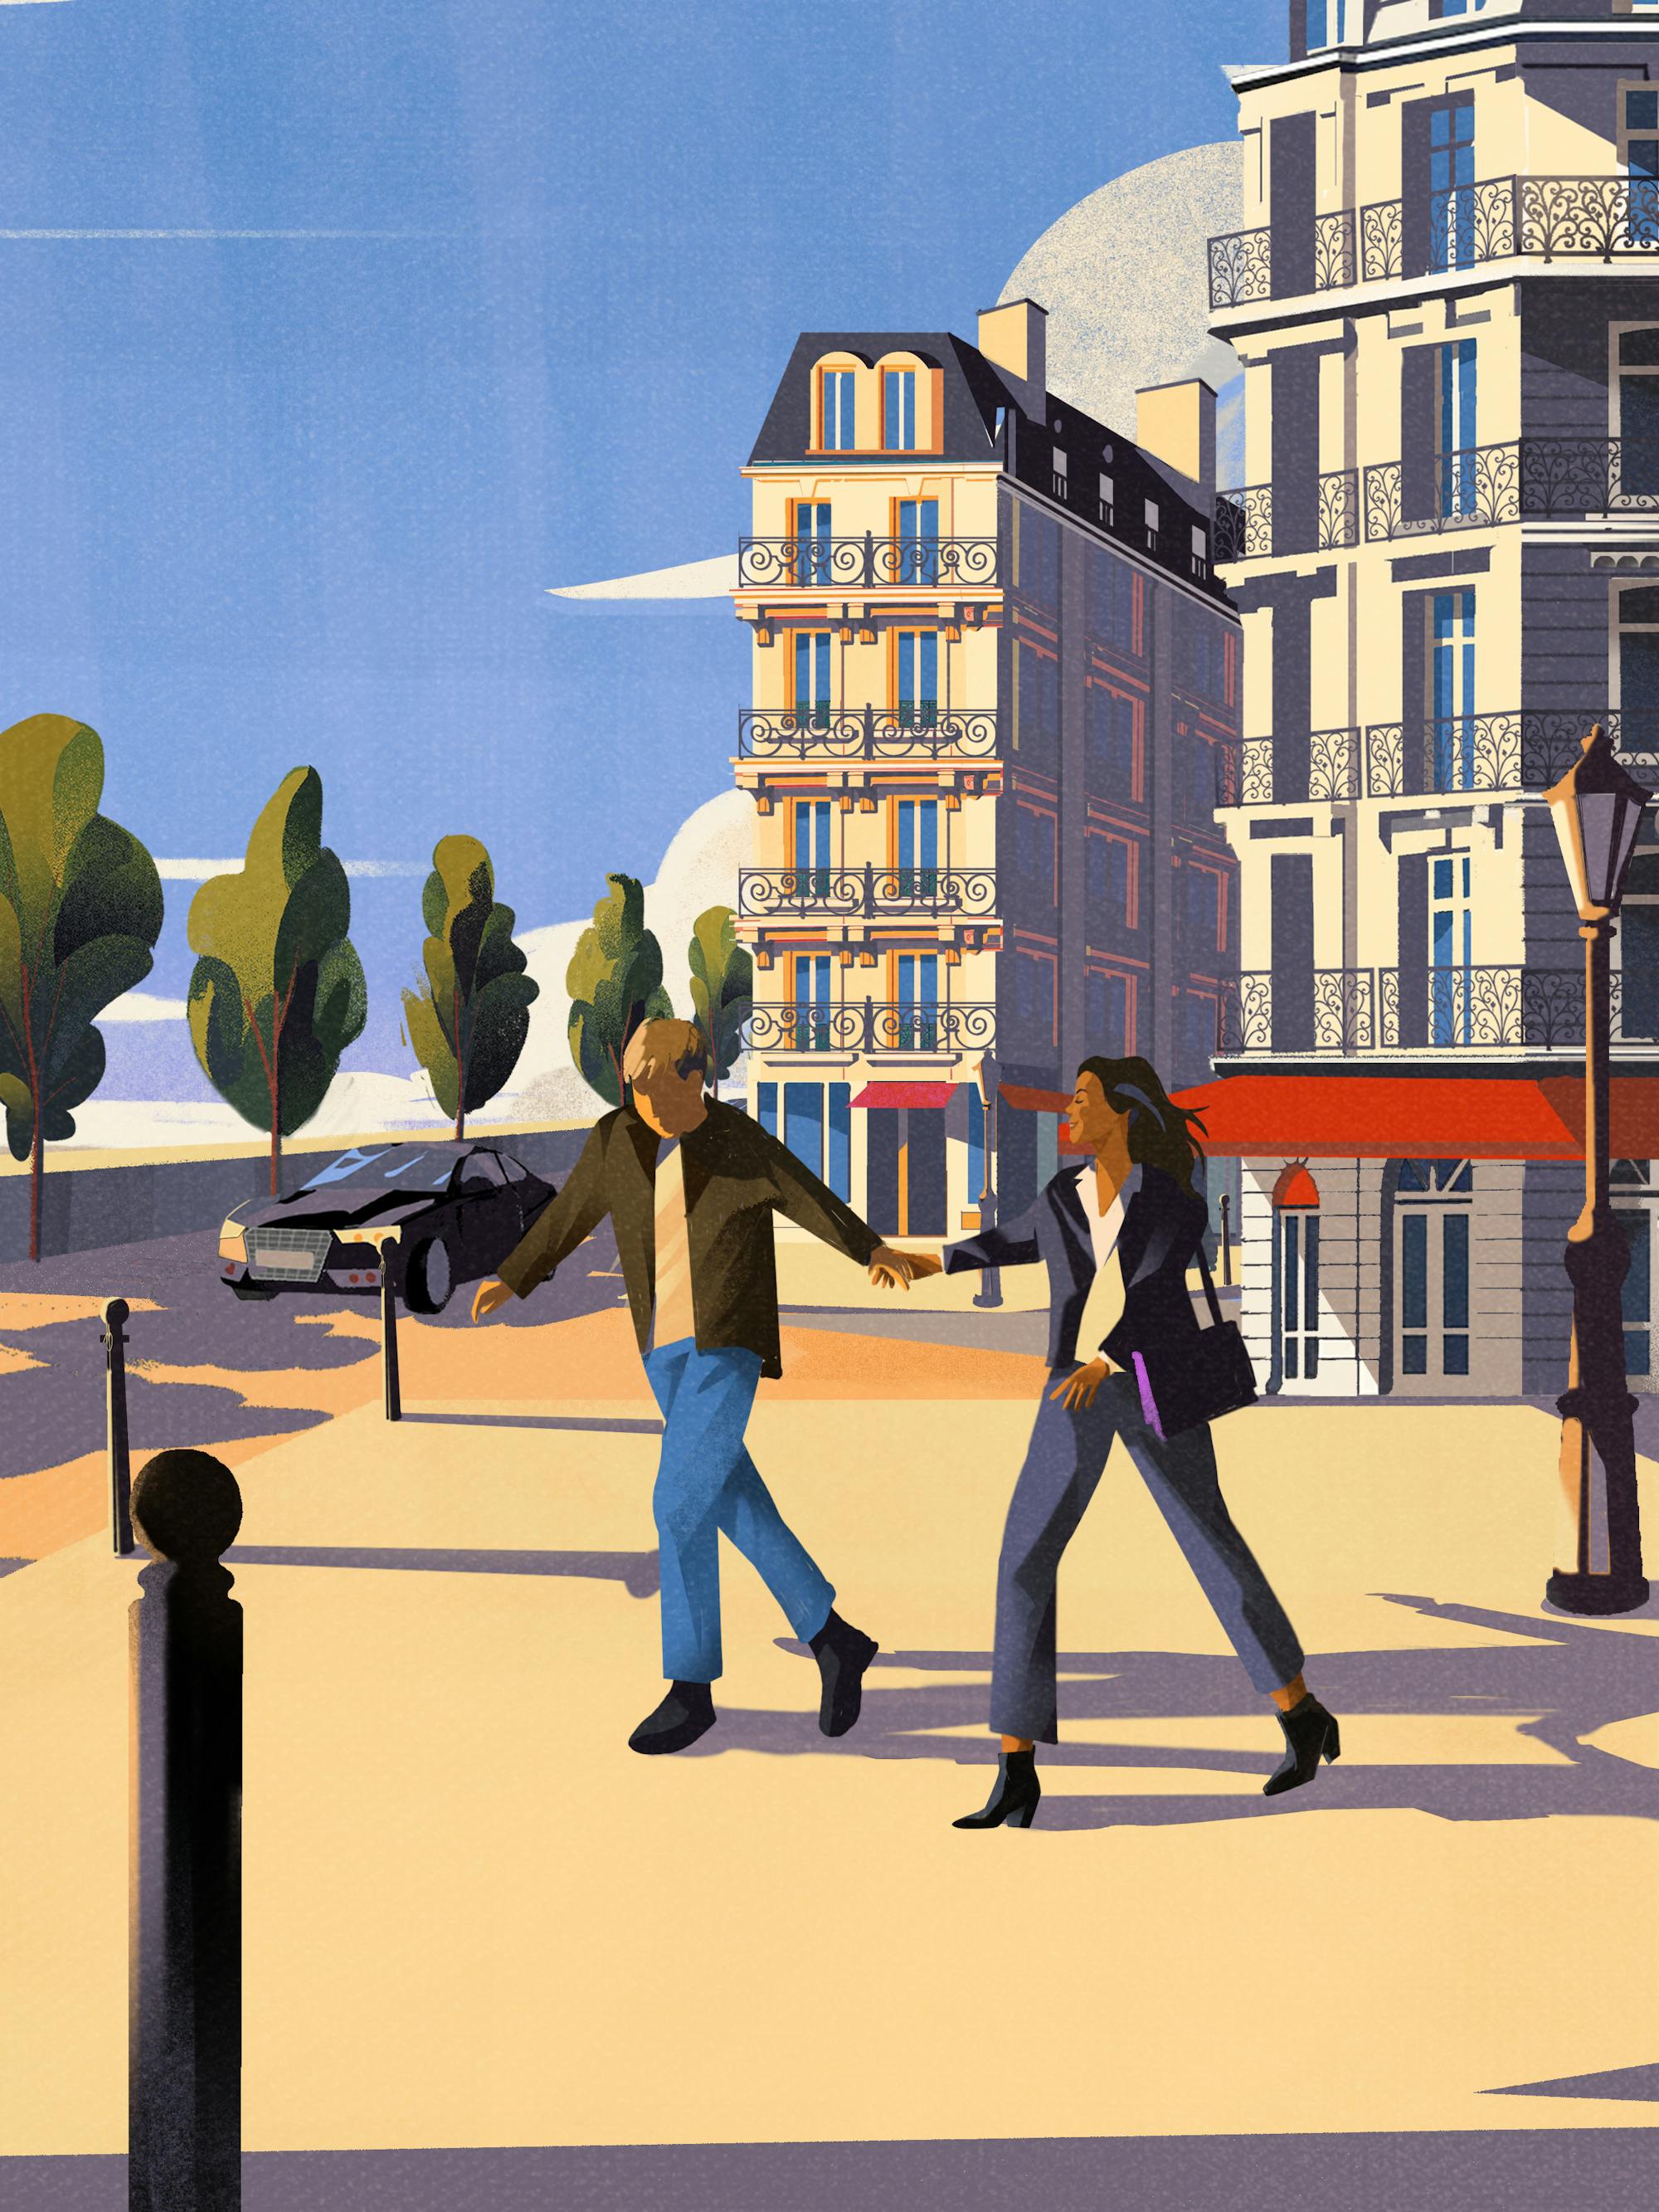 An illustration of Dexter Mayhew and Emma Morley walking through Paris streets.